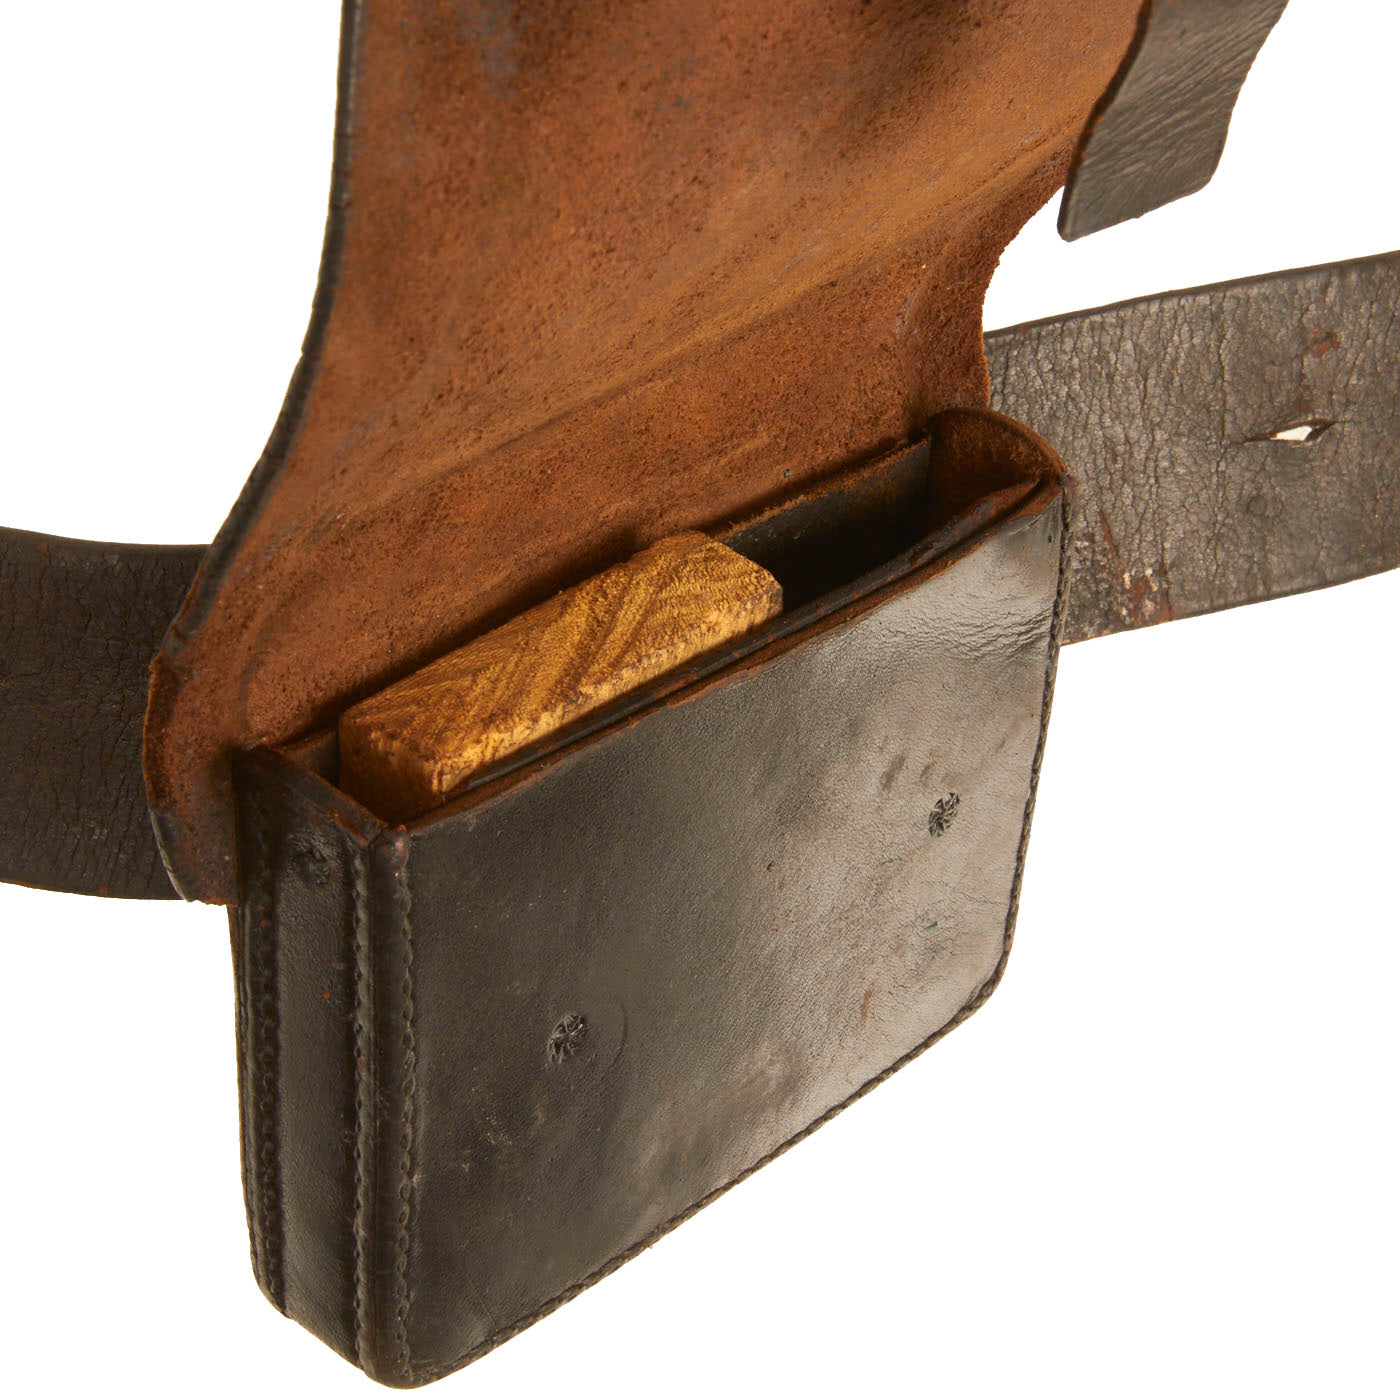 Original U.S. Civil War M-1851 NCO Belt with Pistol Cartridge Box